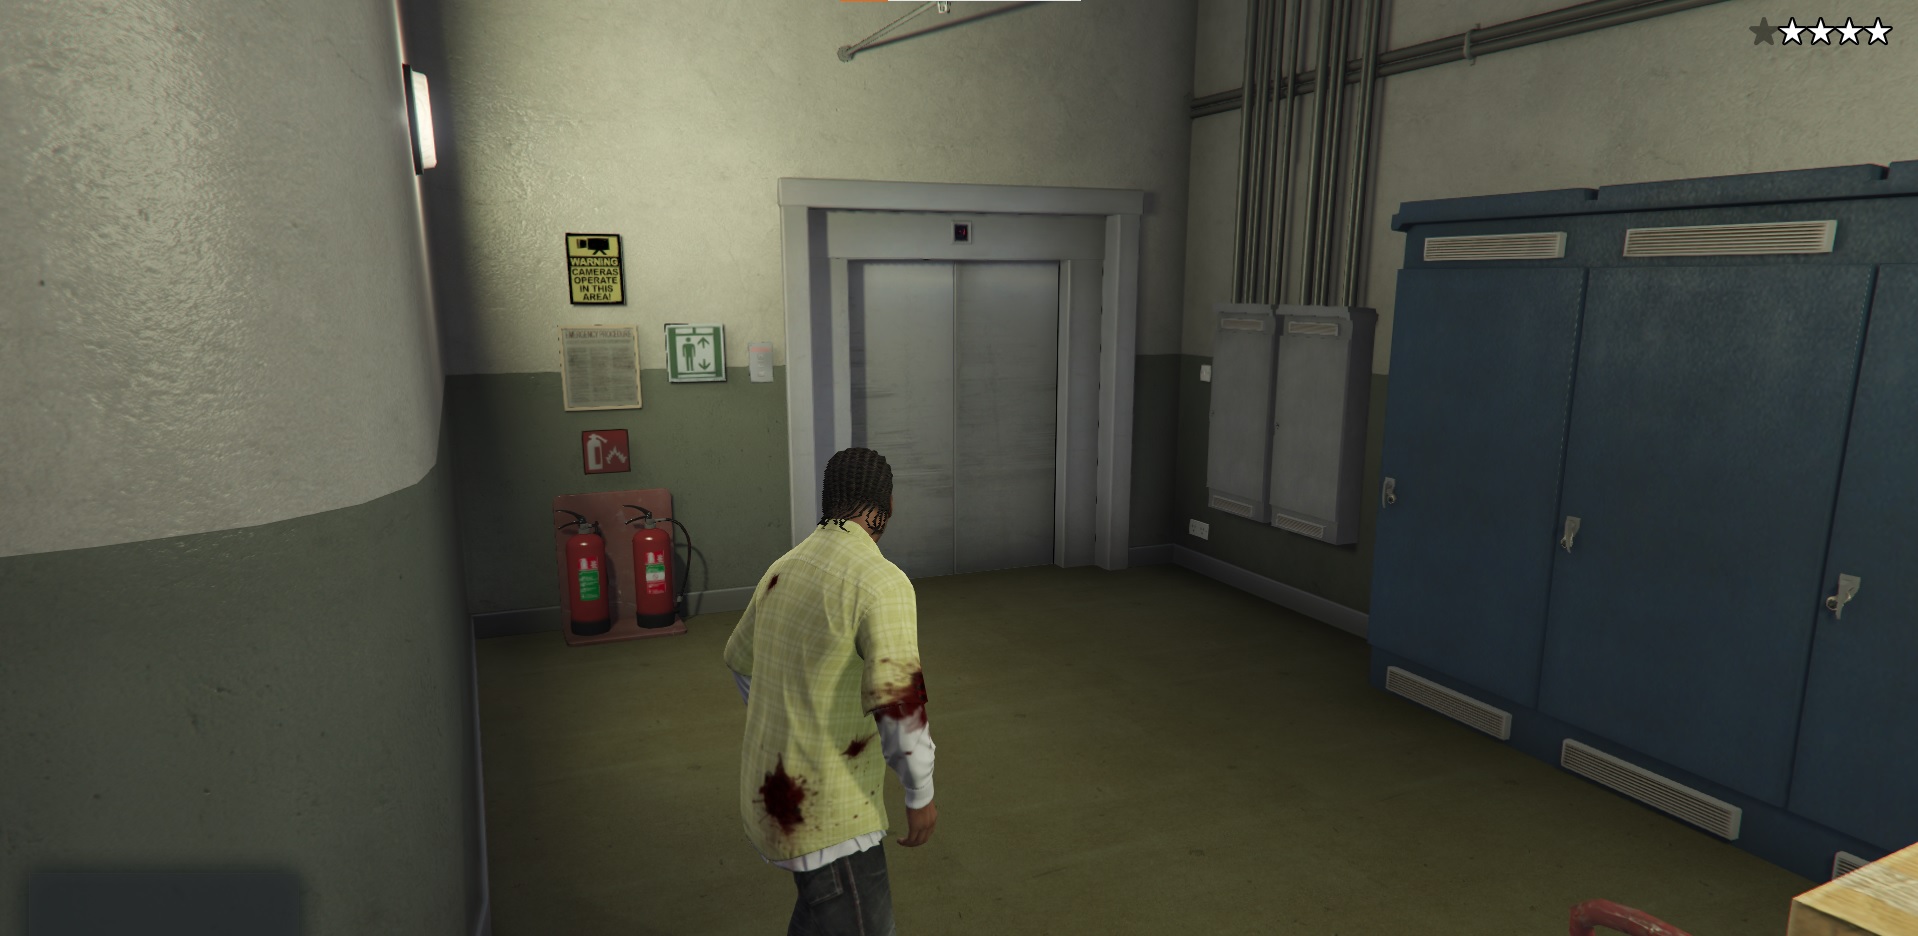 GTA 5: How To Use Elevator